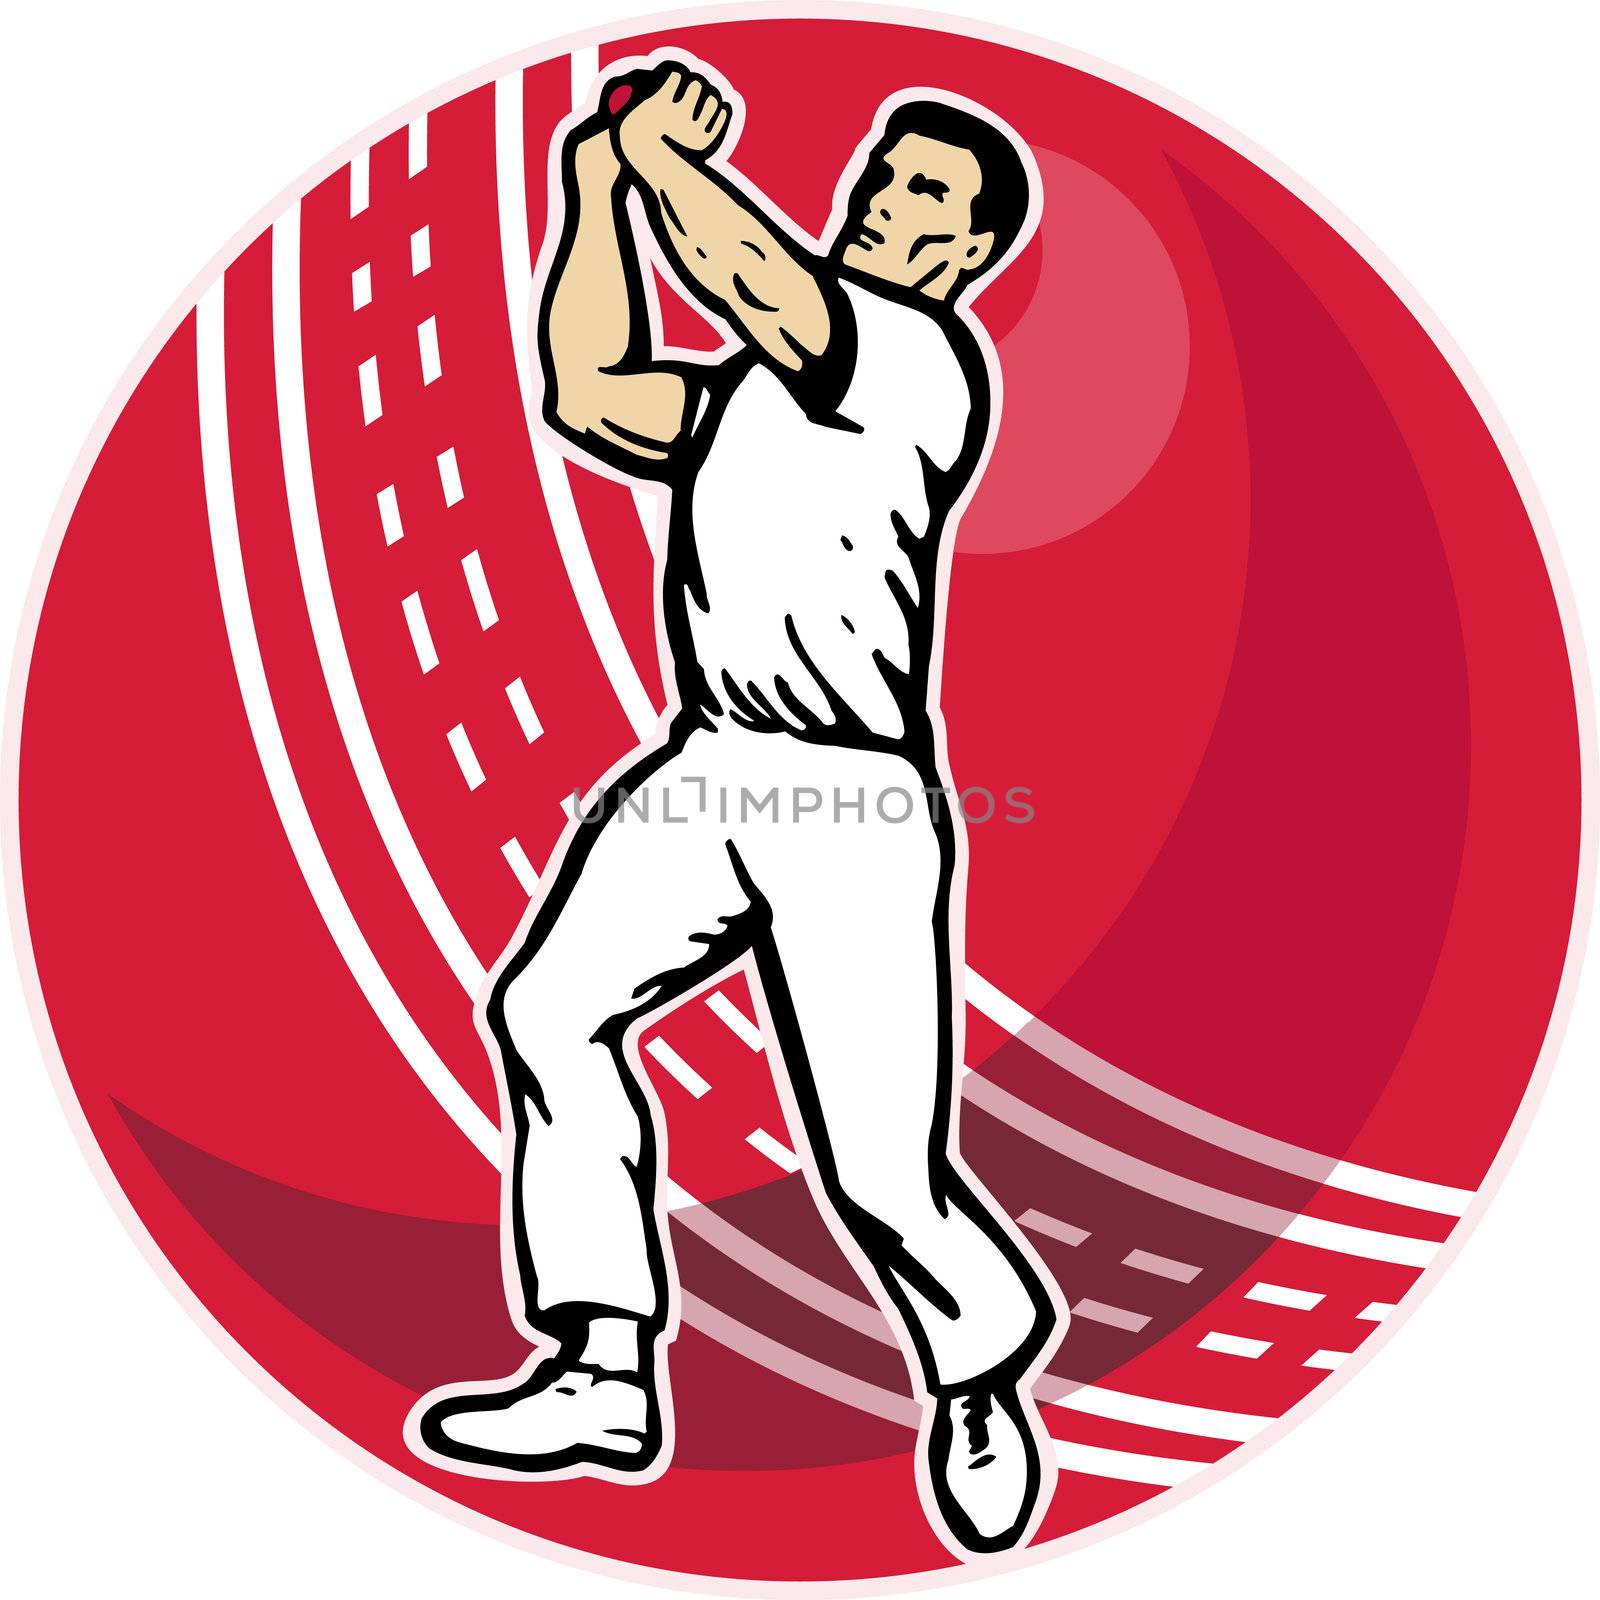 cricket bowler bowling ball by patrimonio